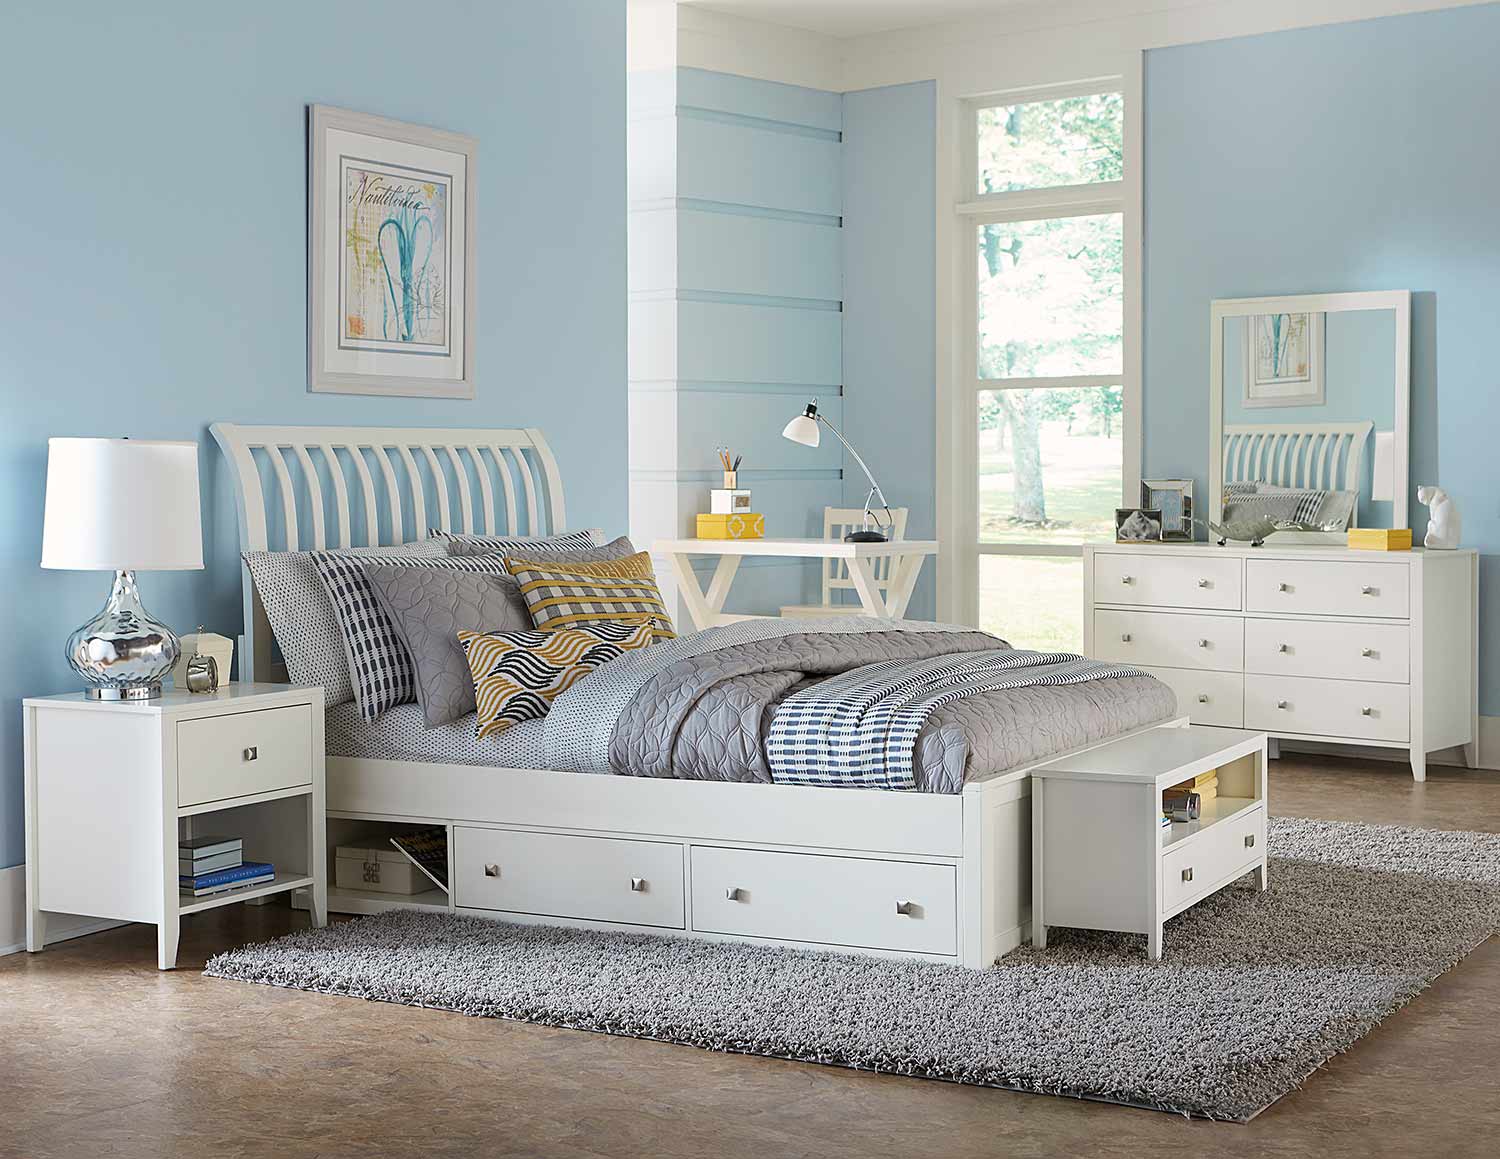 NE Kids Pulse Rake Sleigh Bedroom Set With Storage - White